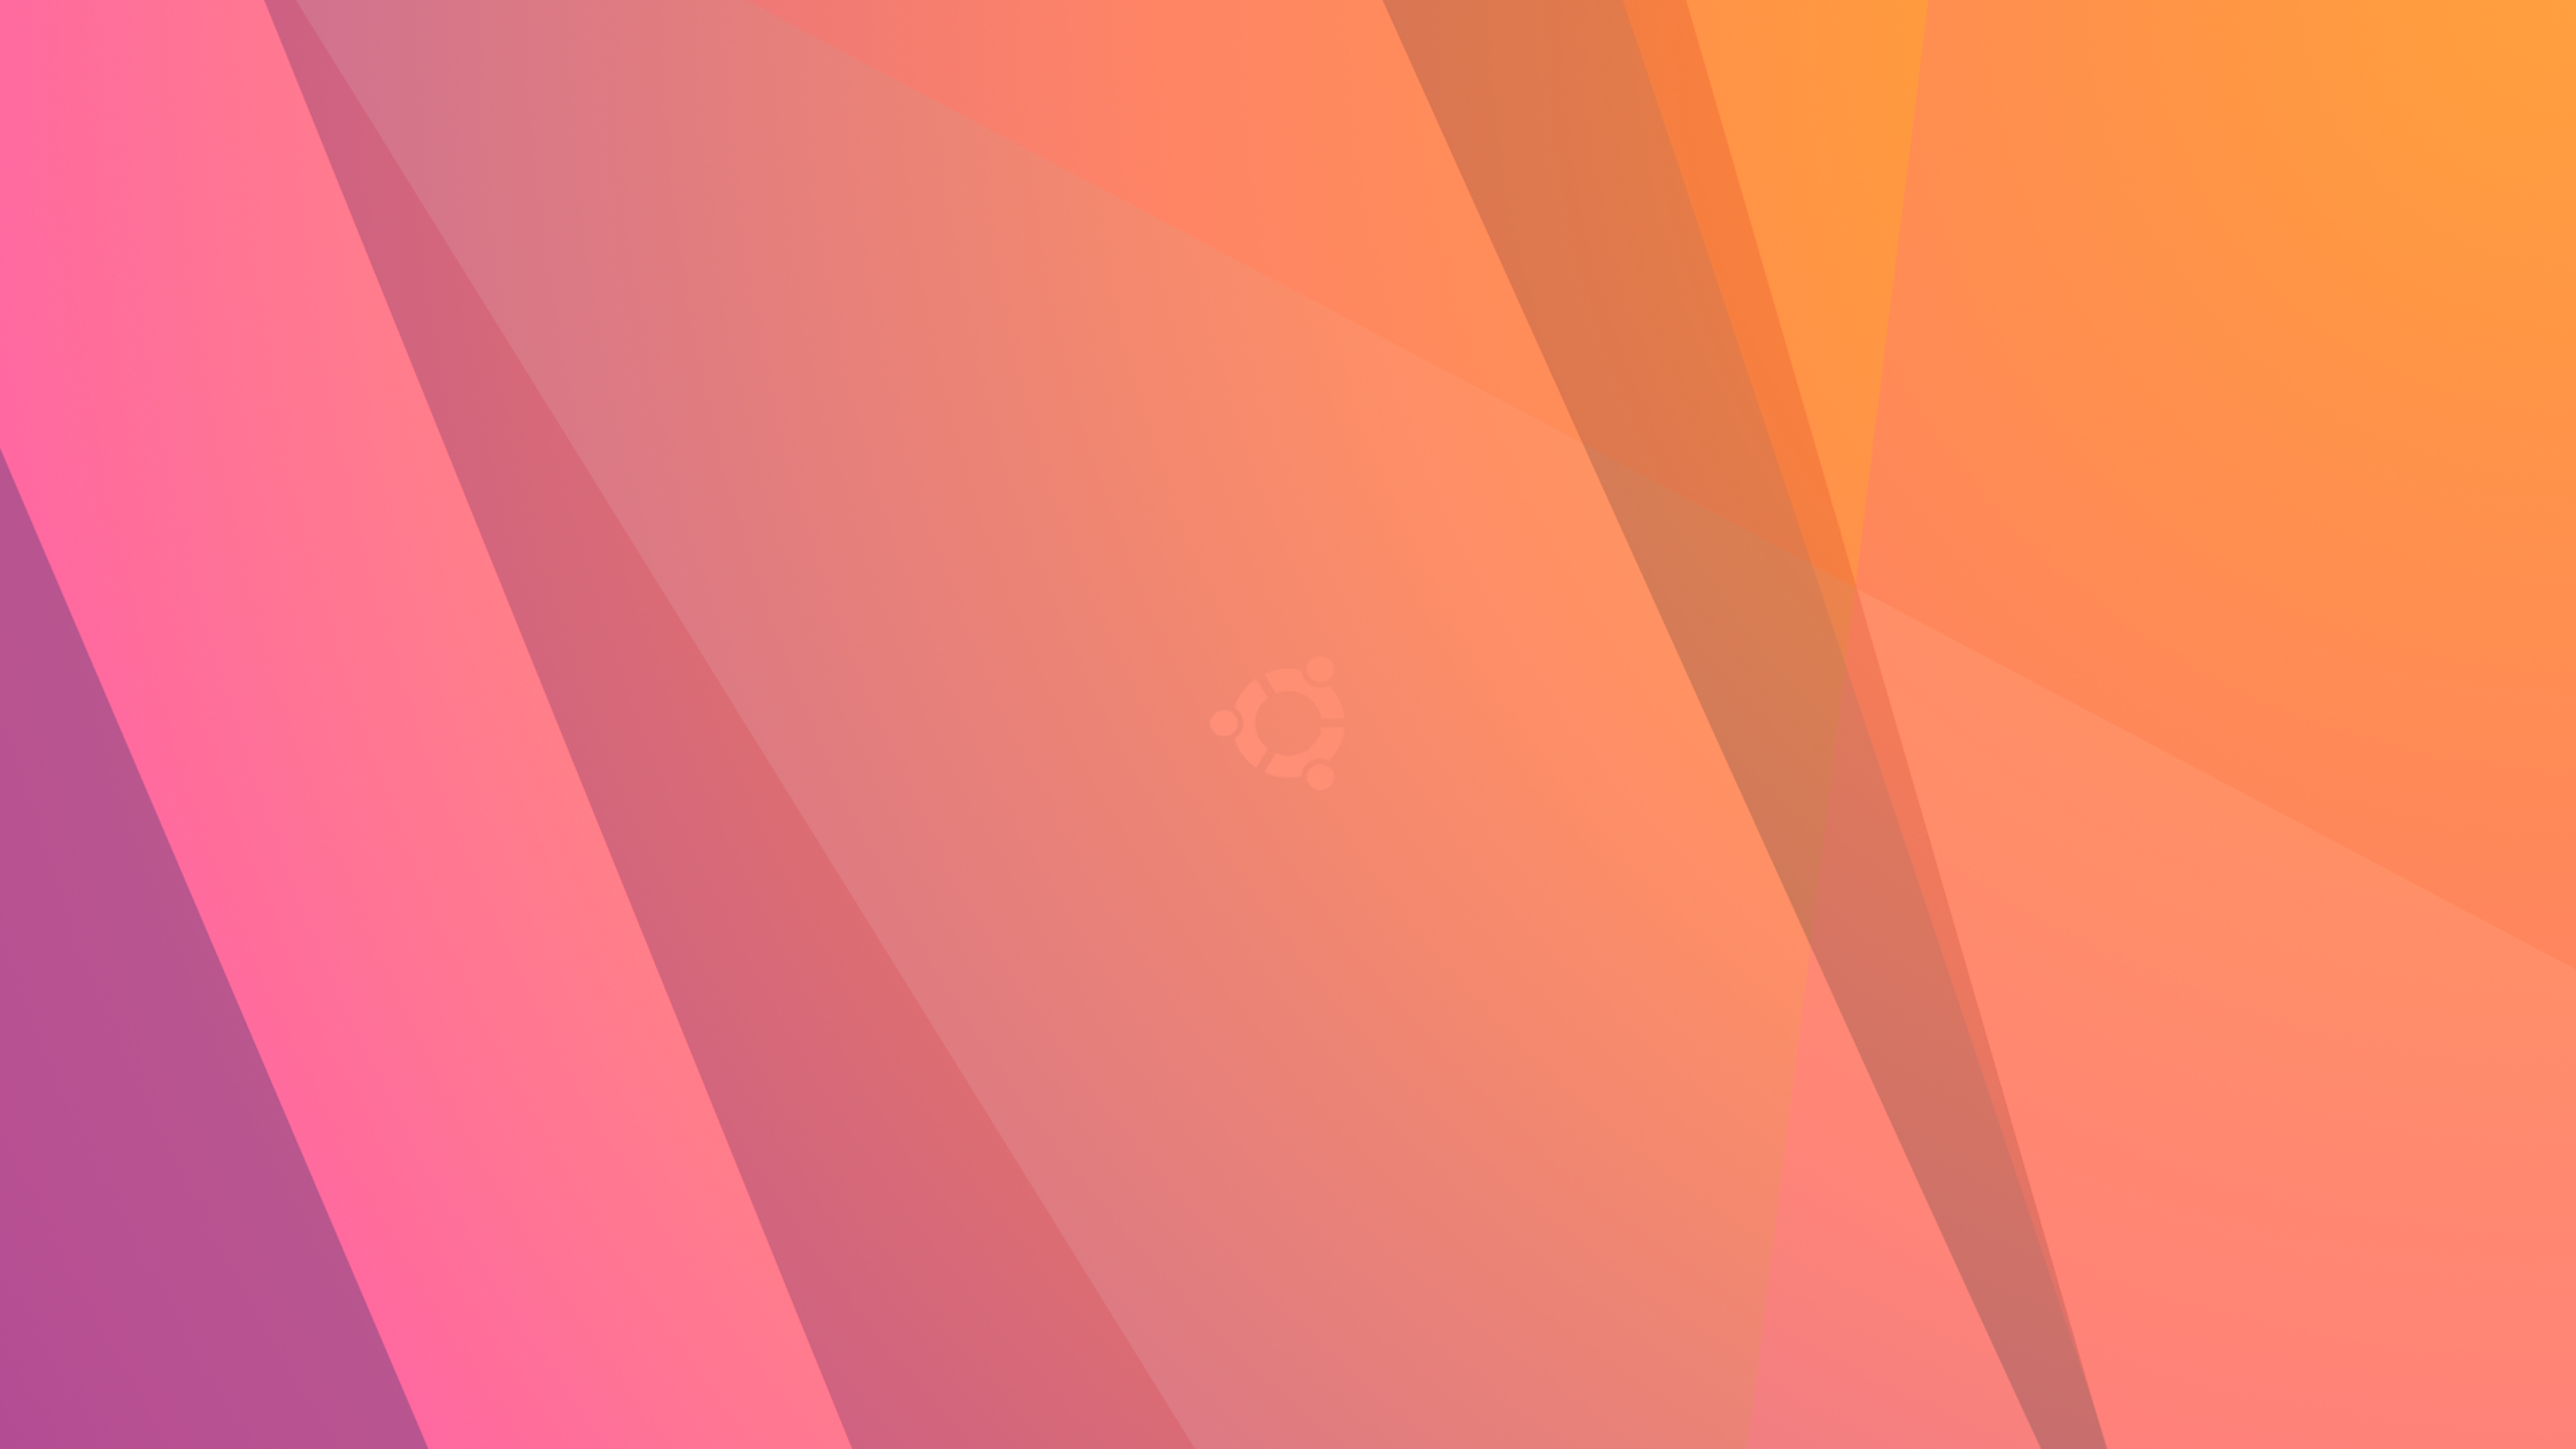 Ubuntu Default Wallpapers On Arch Linux  OSTechNix